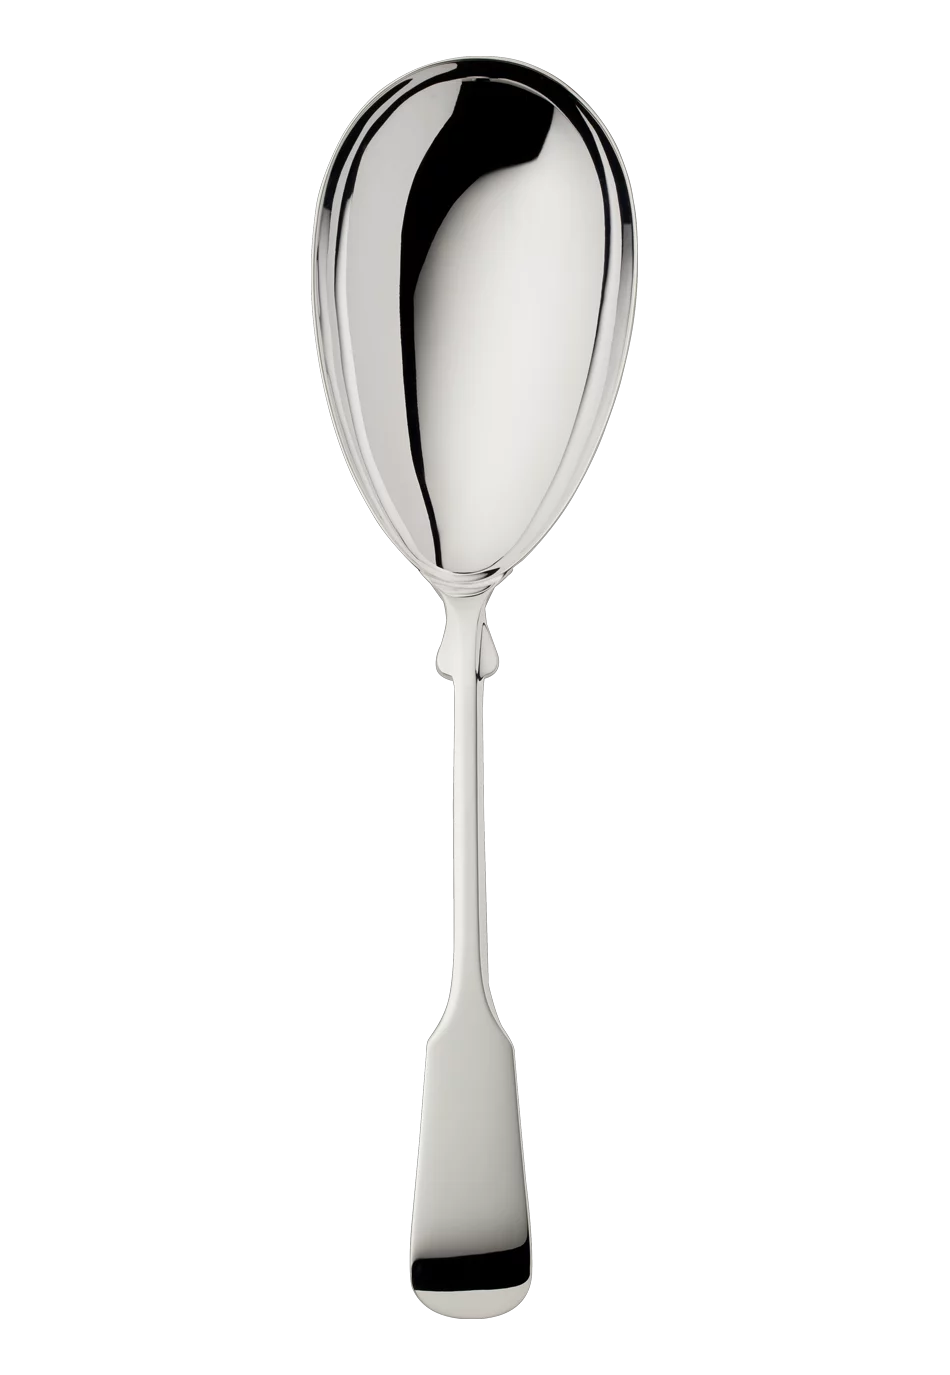 Spaten Serving Spoon (150g massive silverplated)